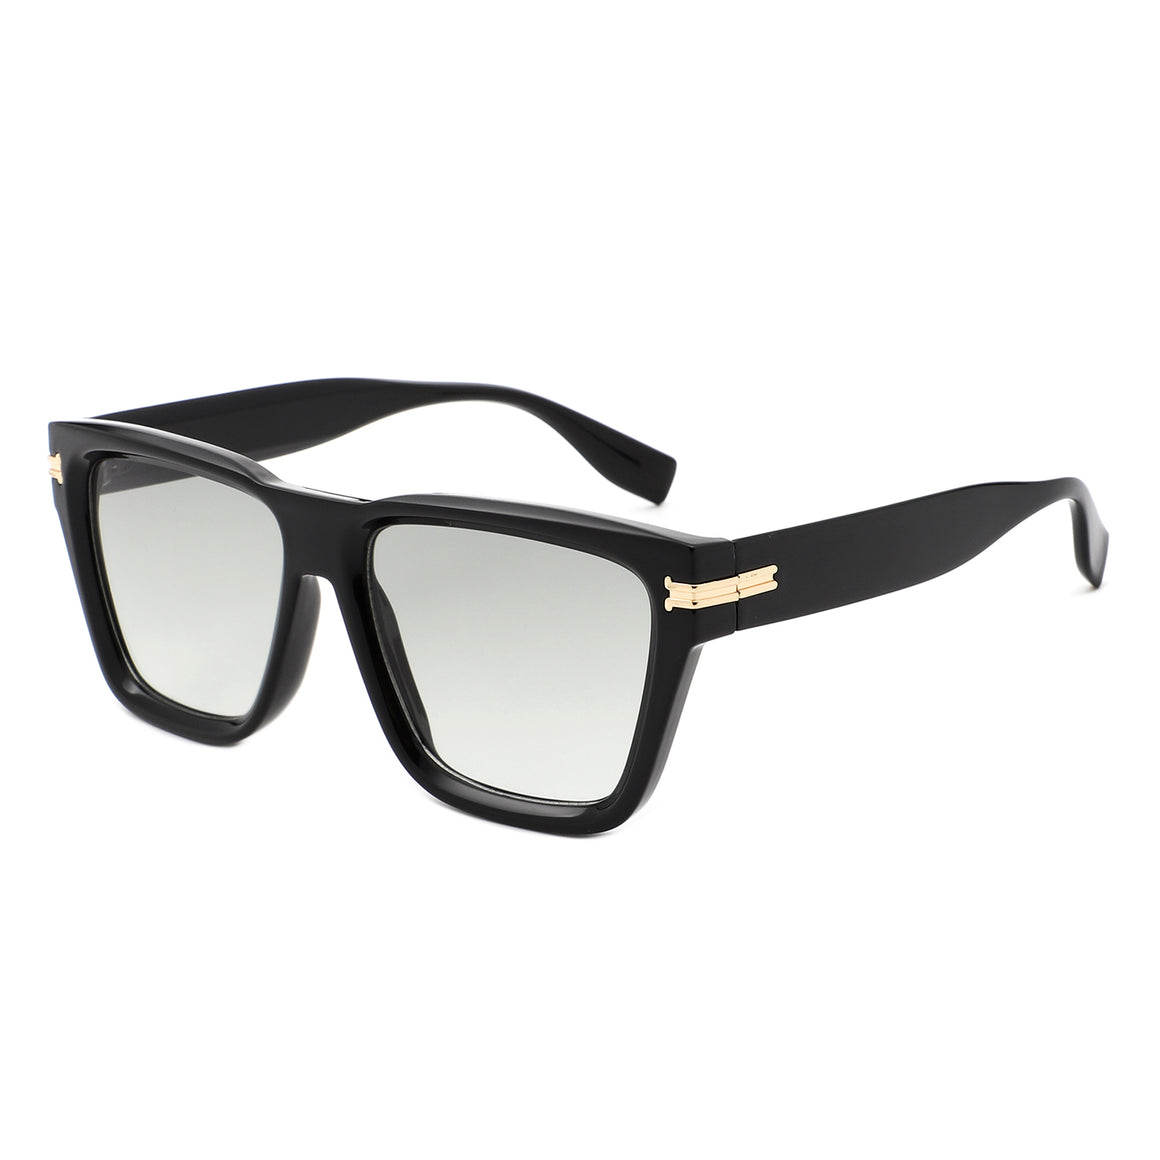 Kaflil - Cramilo Chic Square Frame Women's Fashion Tinted Sunglasses